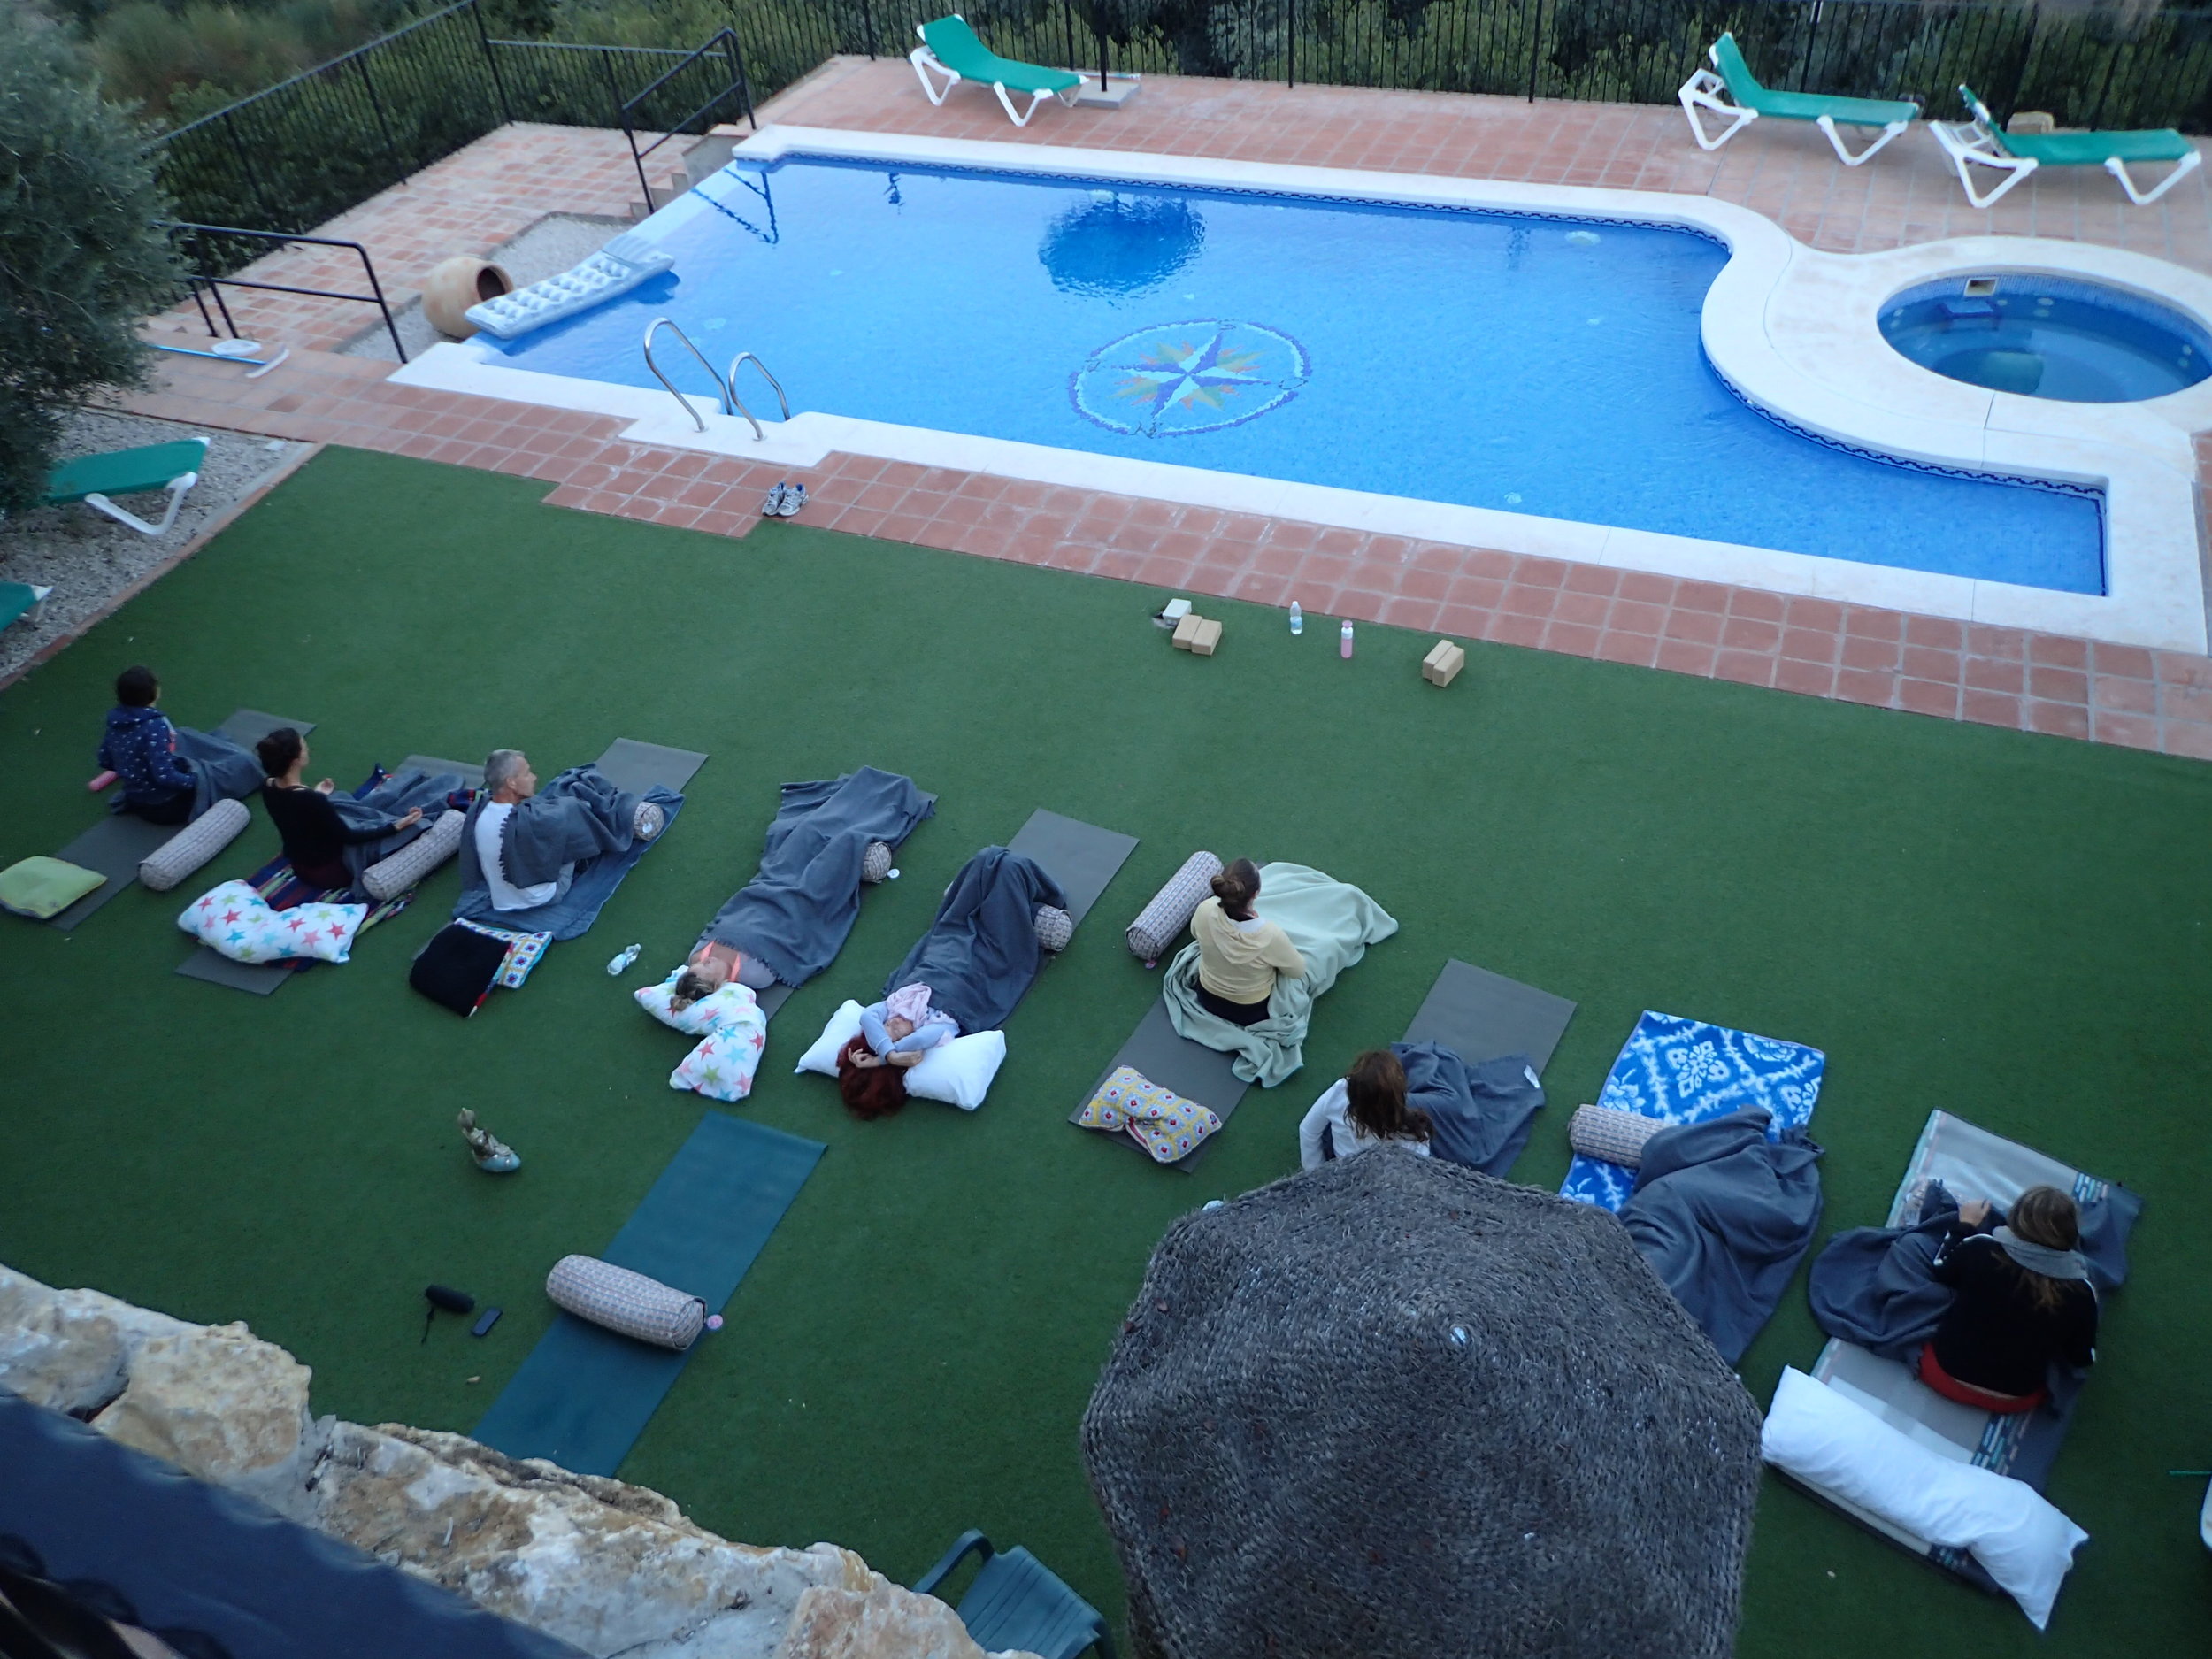 Yoga Nidra at pool at Yin Yang Yoga retreat in the Malaga mountains in Spain with Jane Bakx Yoga (Copy)